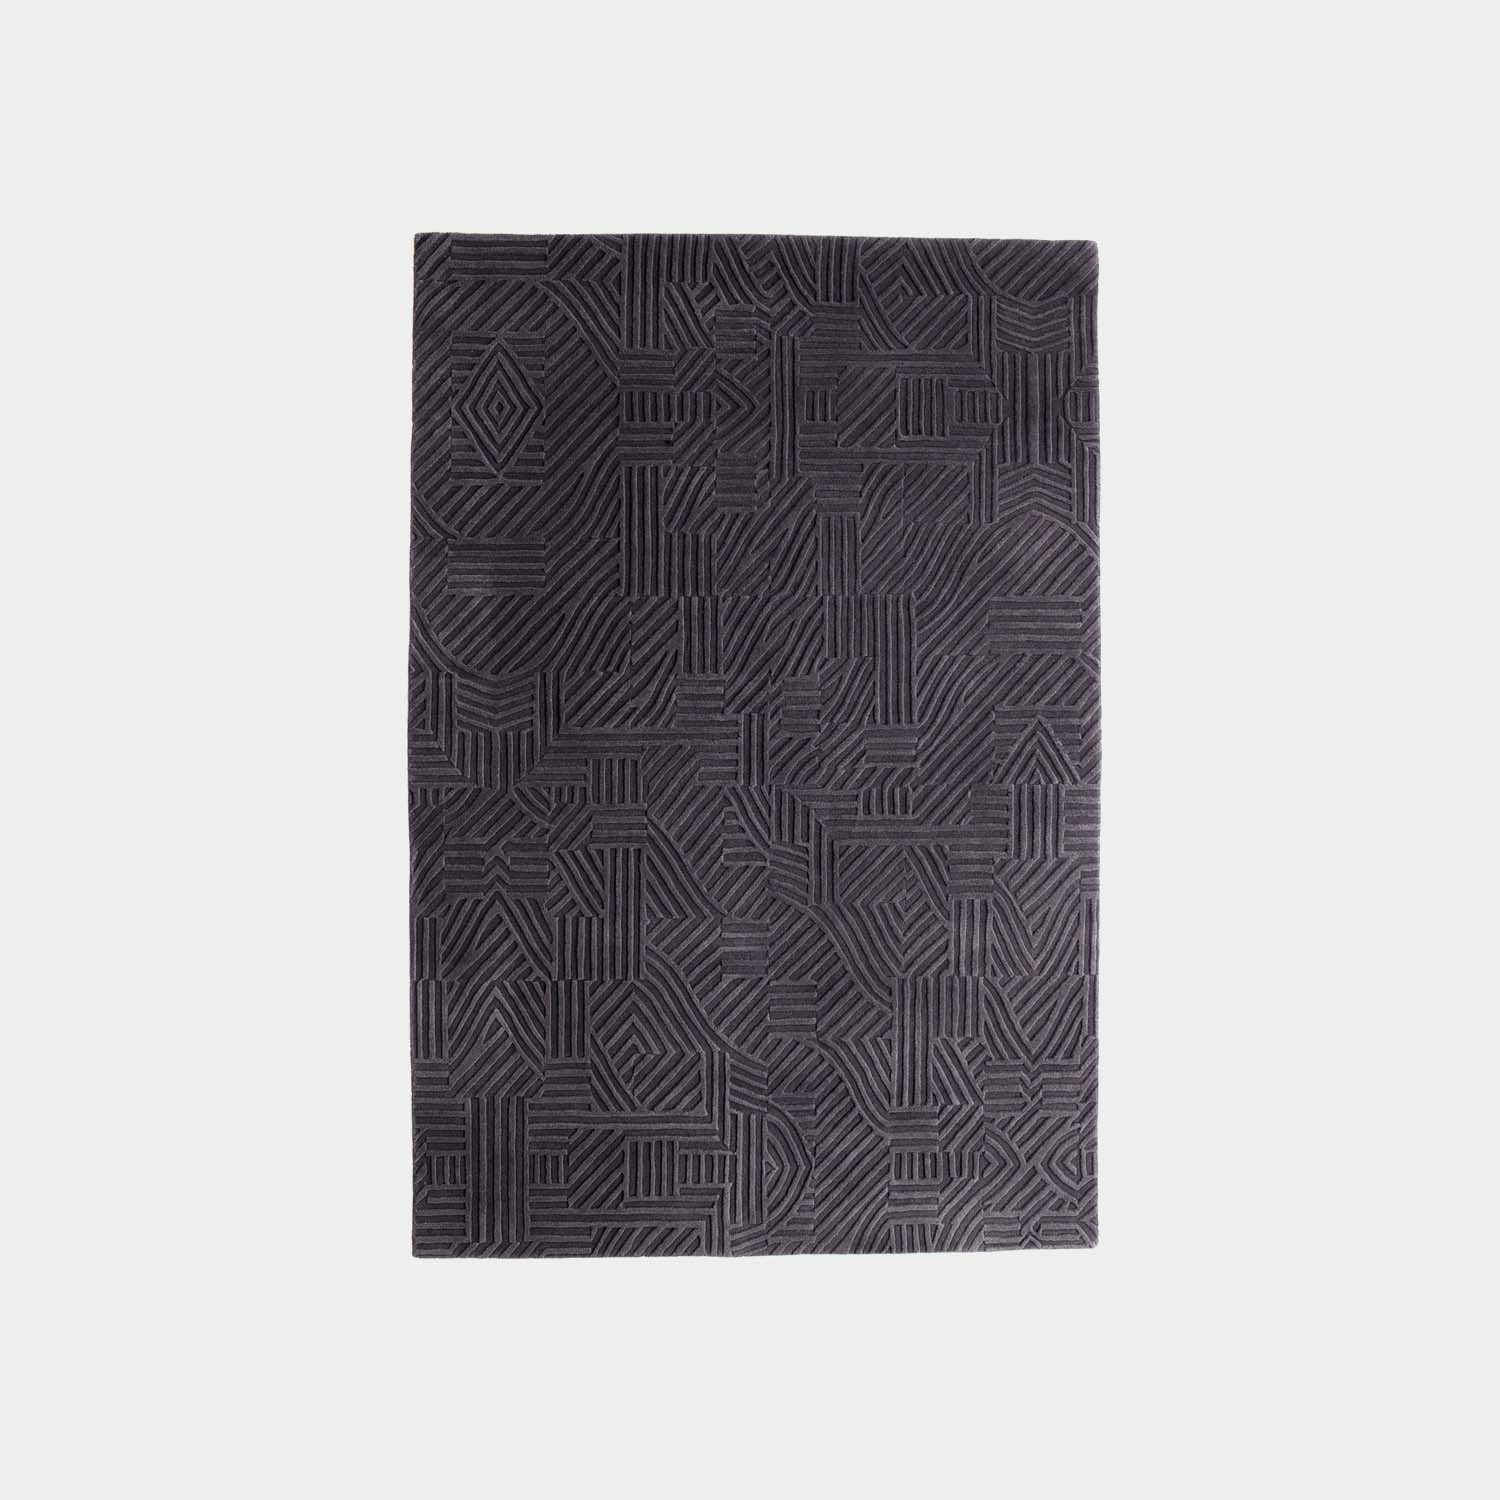 Milton Glaser Rug, African Pattern 3